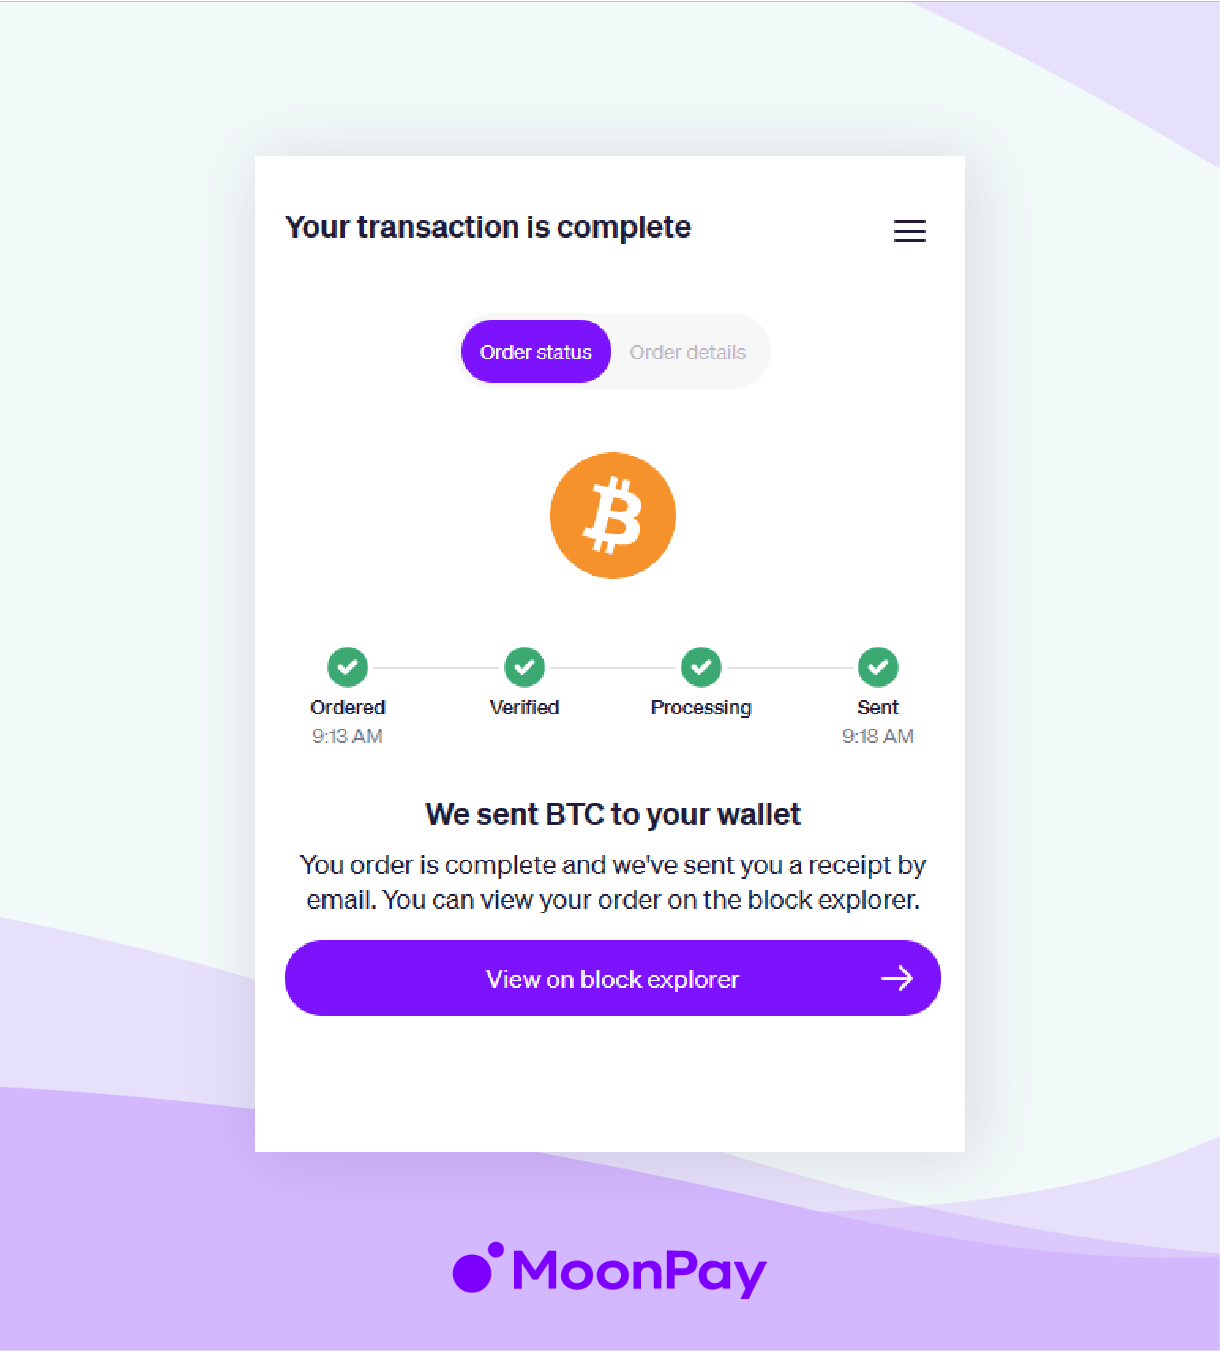 Transaction tracker UI in MoonPay app.